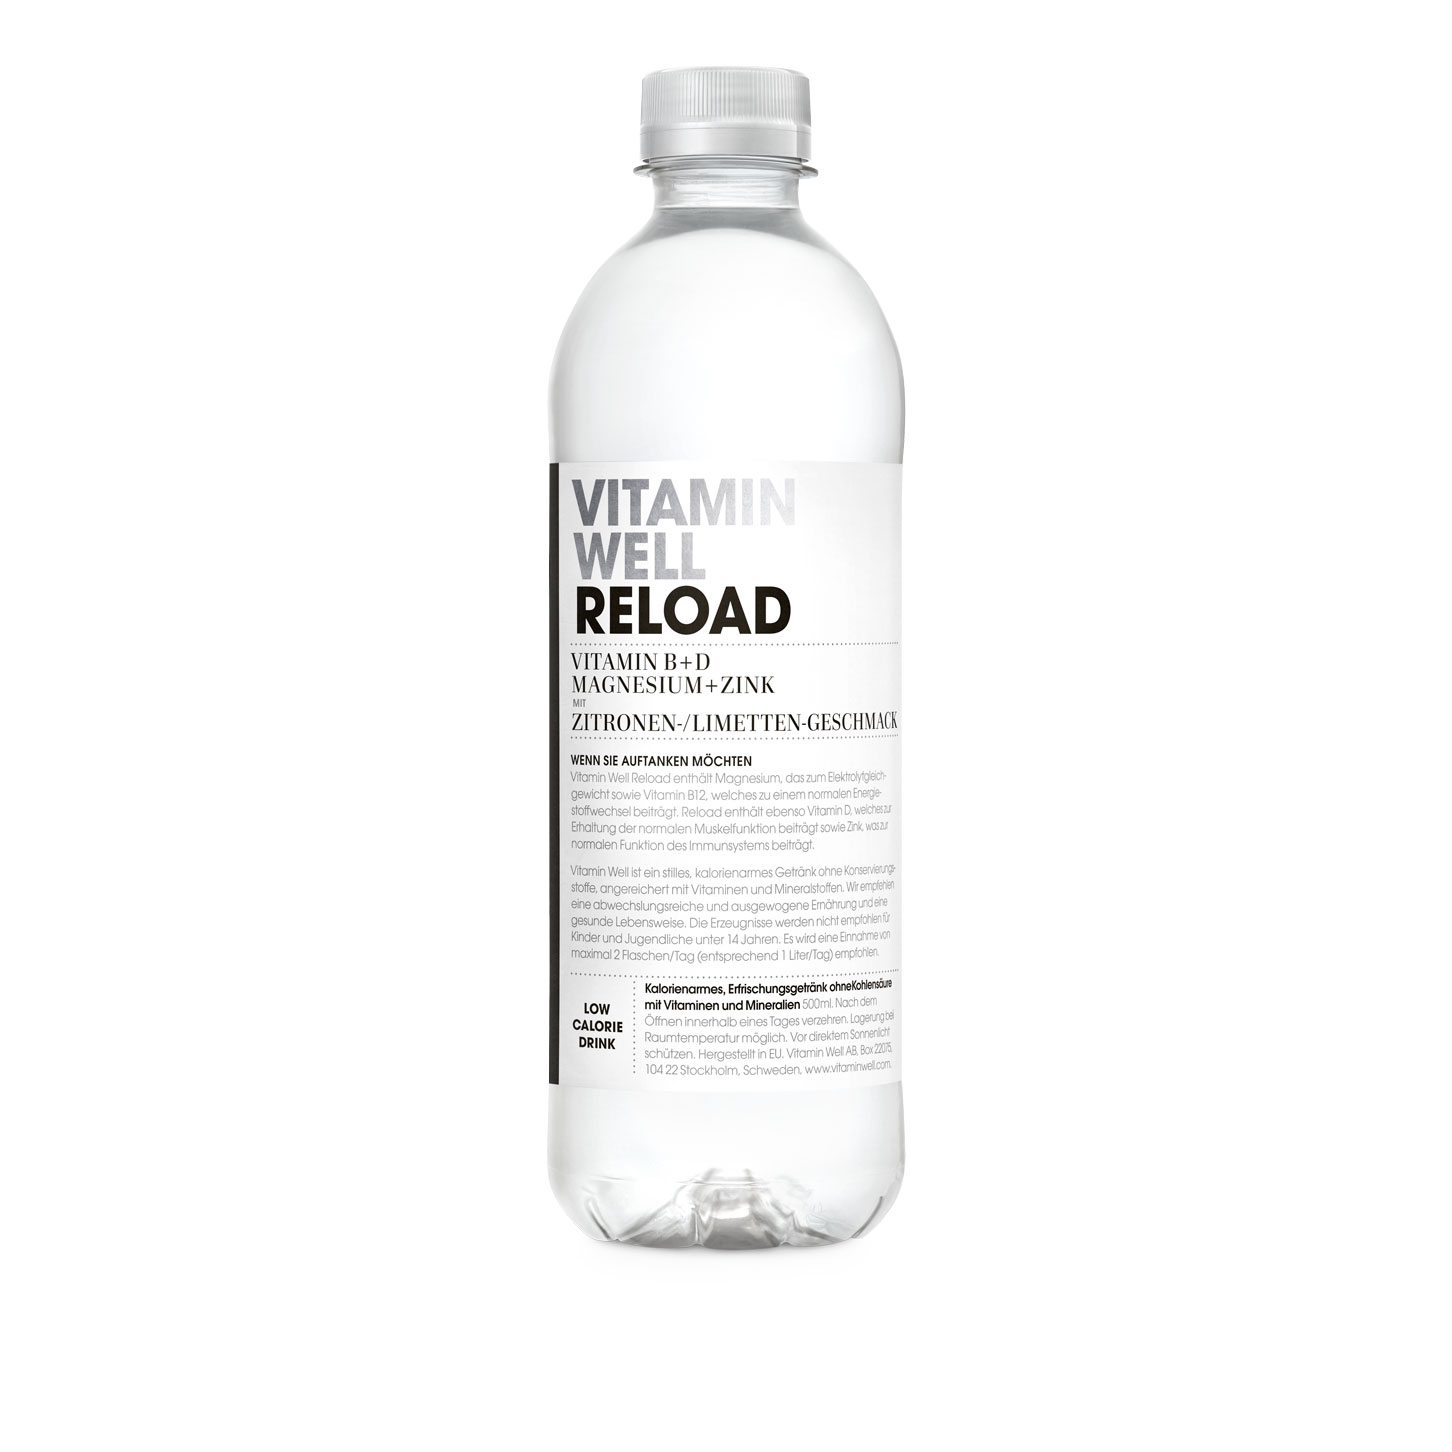 Zinc water. Vitamin Reload вода. Vitamin well напитки. Vitamin well вода.